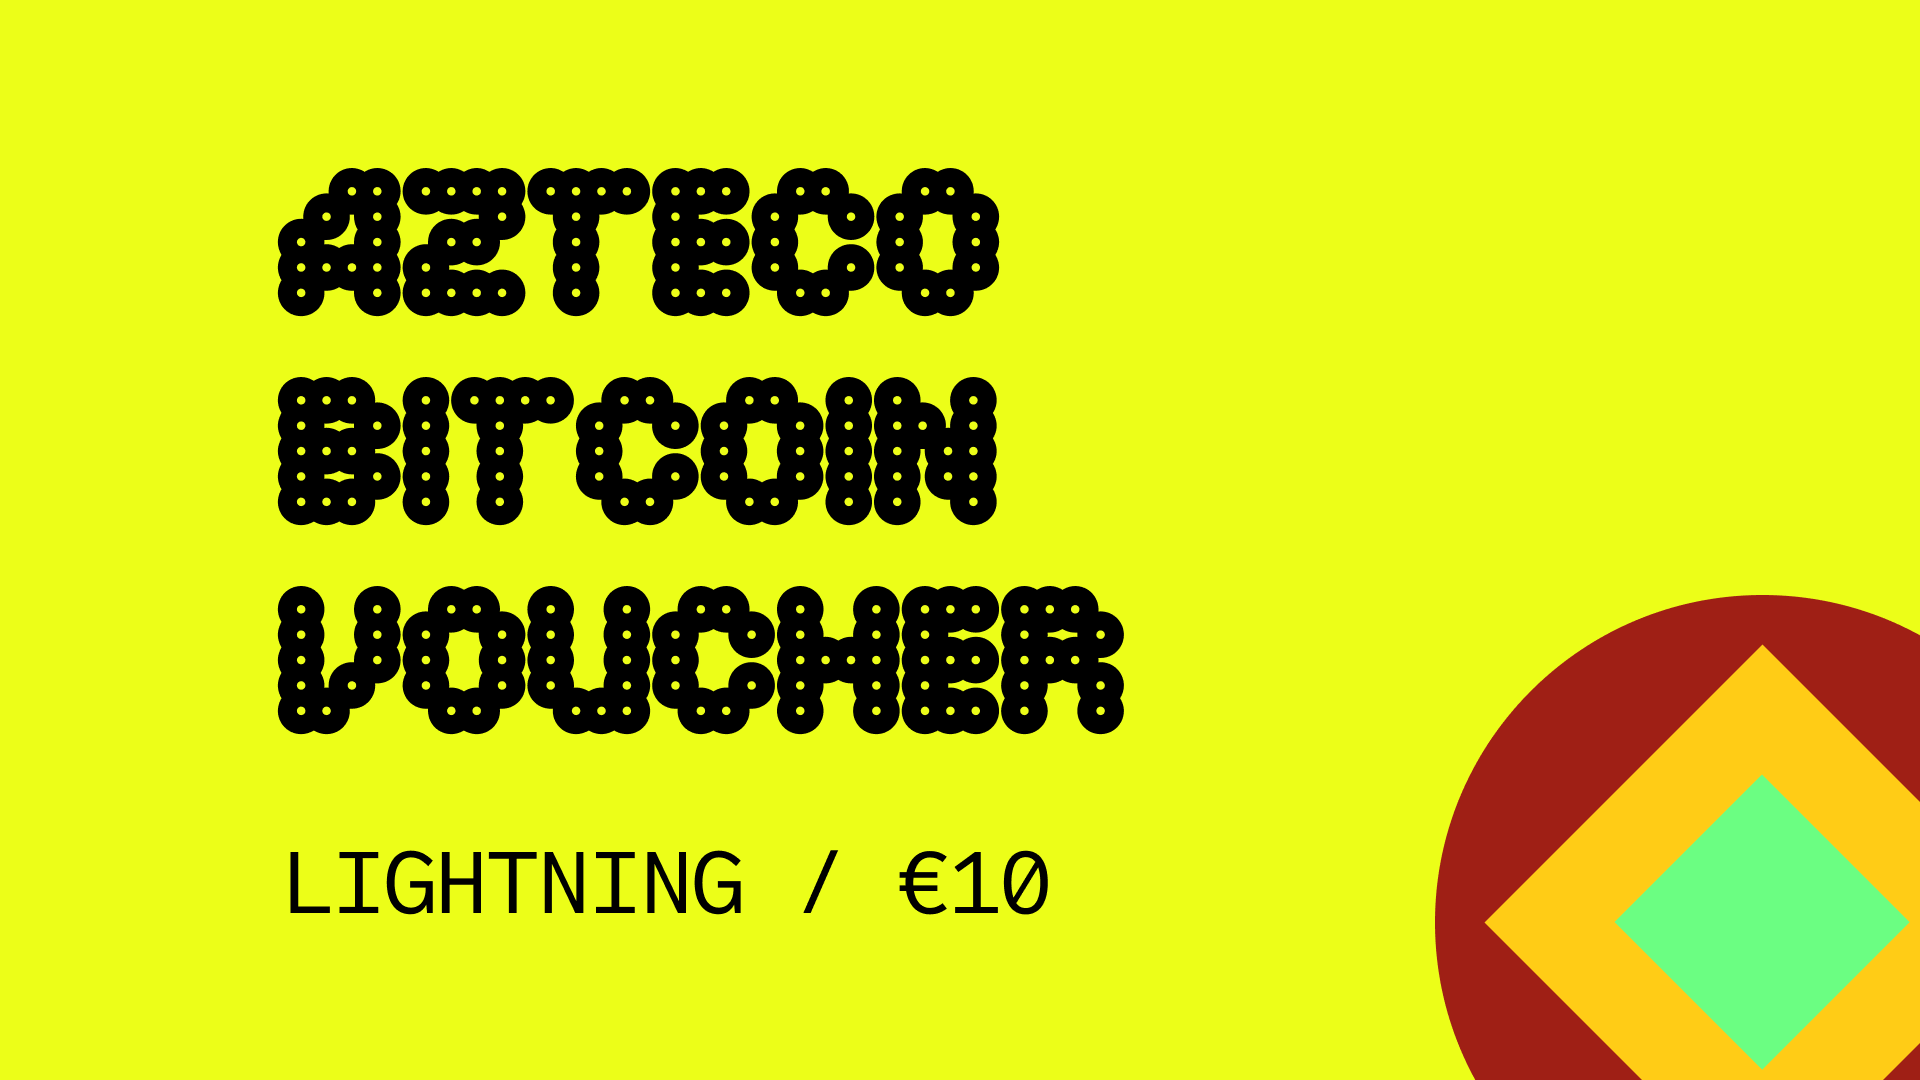 Azteco Bitcoin Lighting €10 Voucher [$ 11.3]